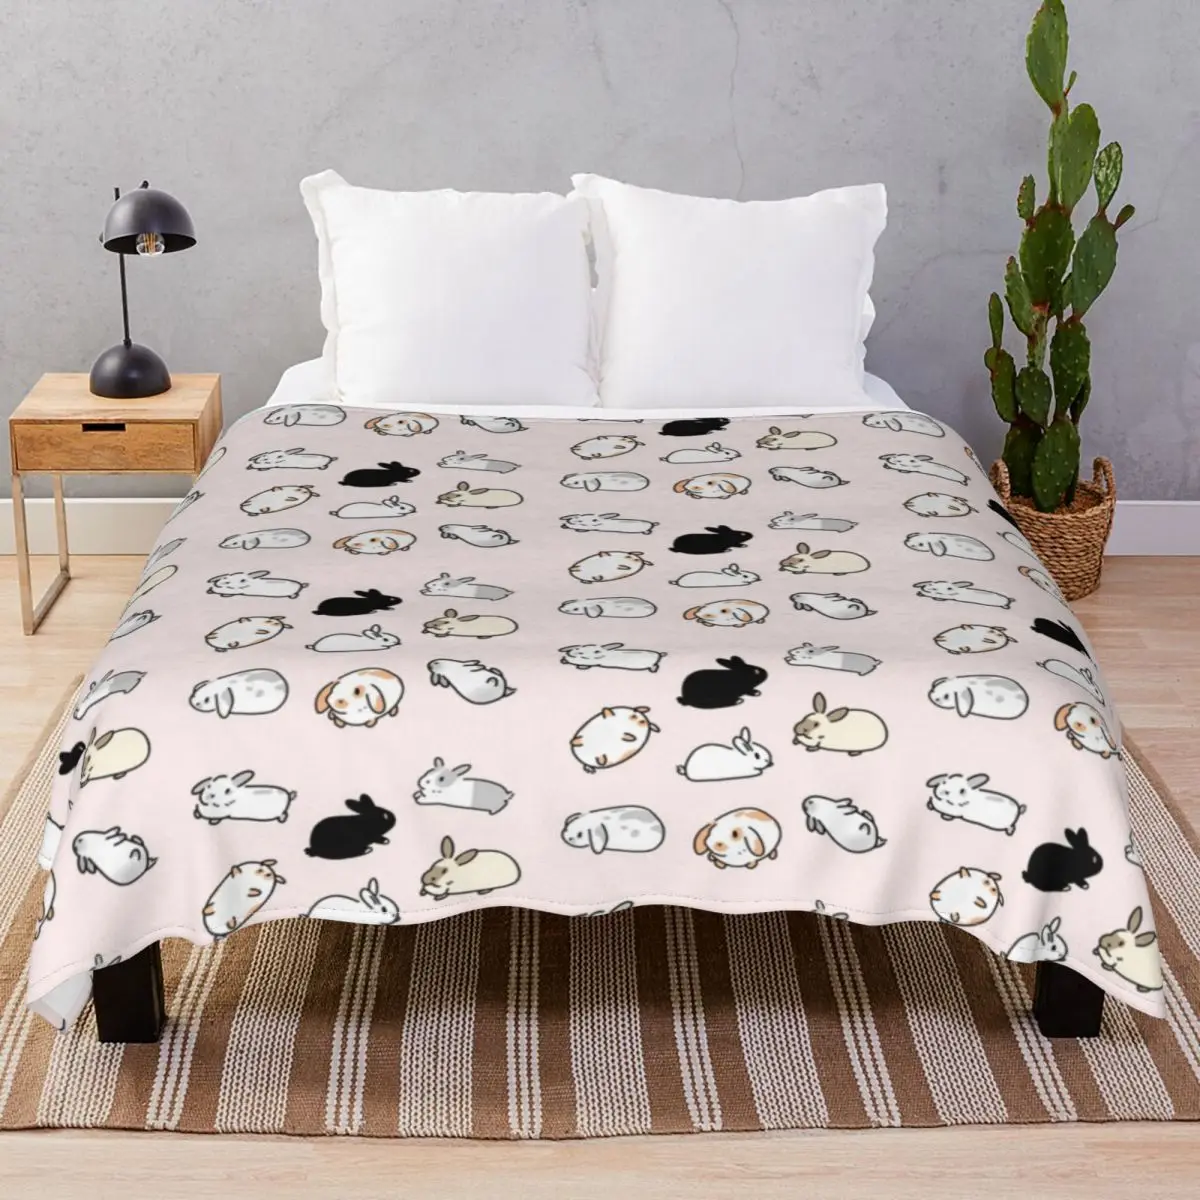 Bunny Rabbits Blankets Fleece Decoration Multi-function Throw Blanket for Bed Sofa Camp Cinema